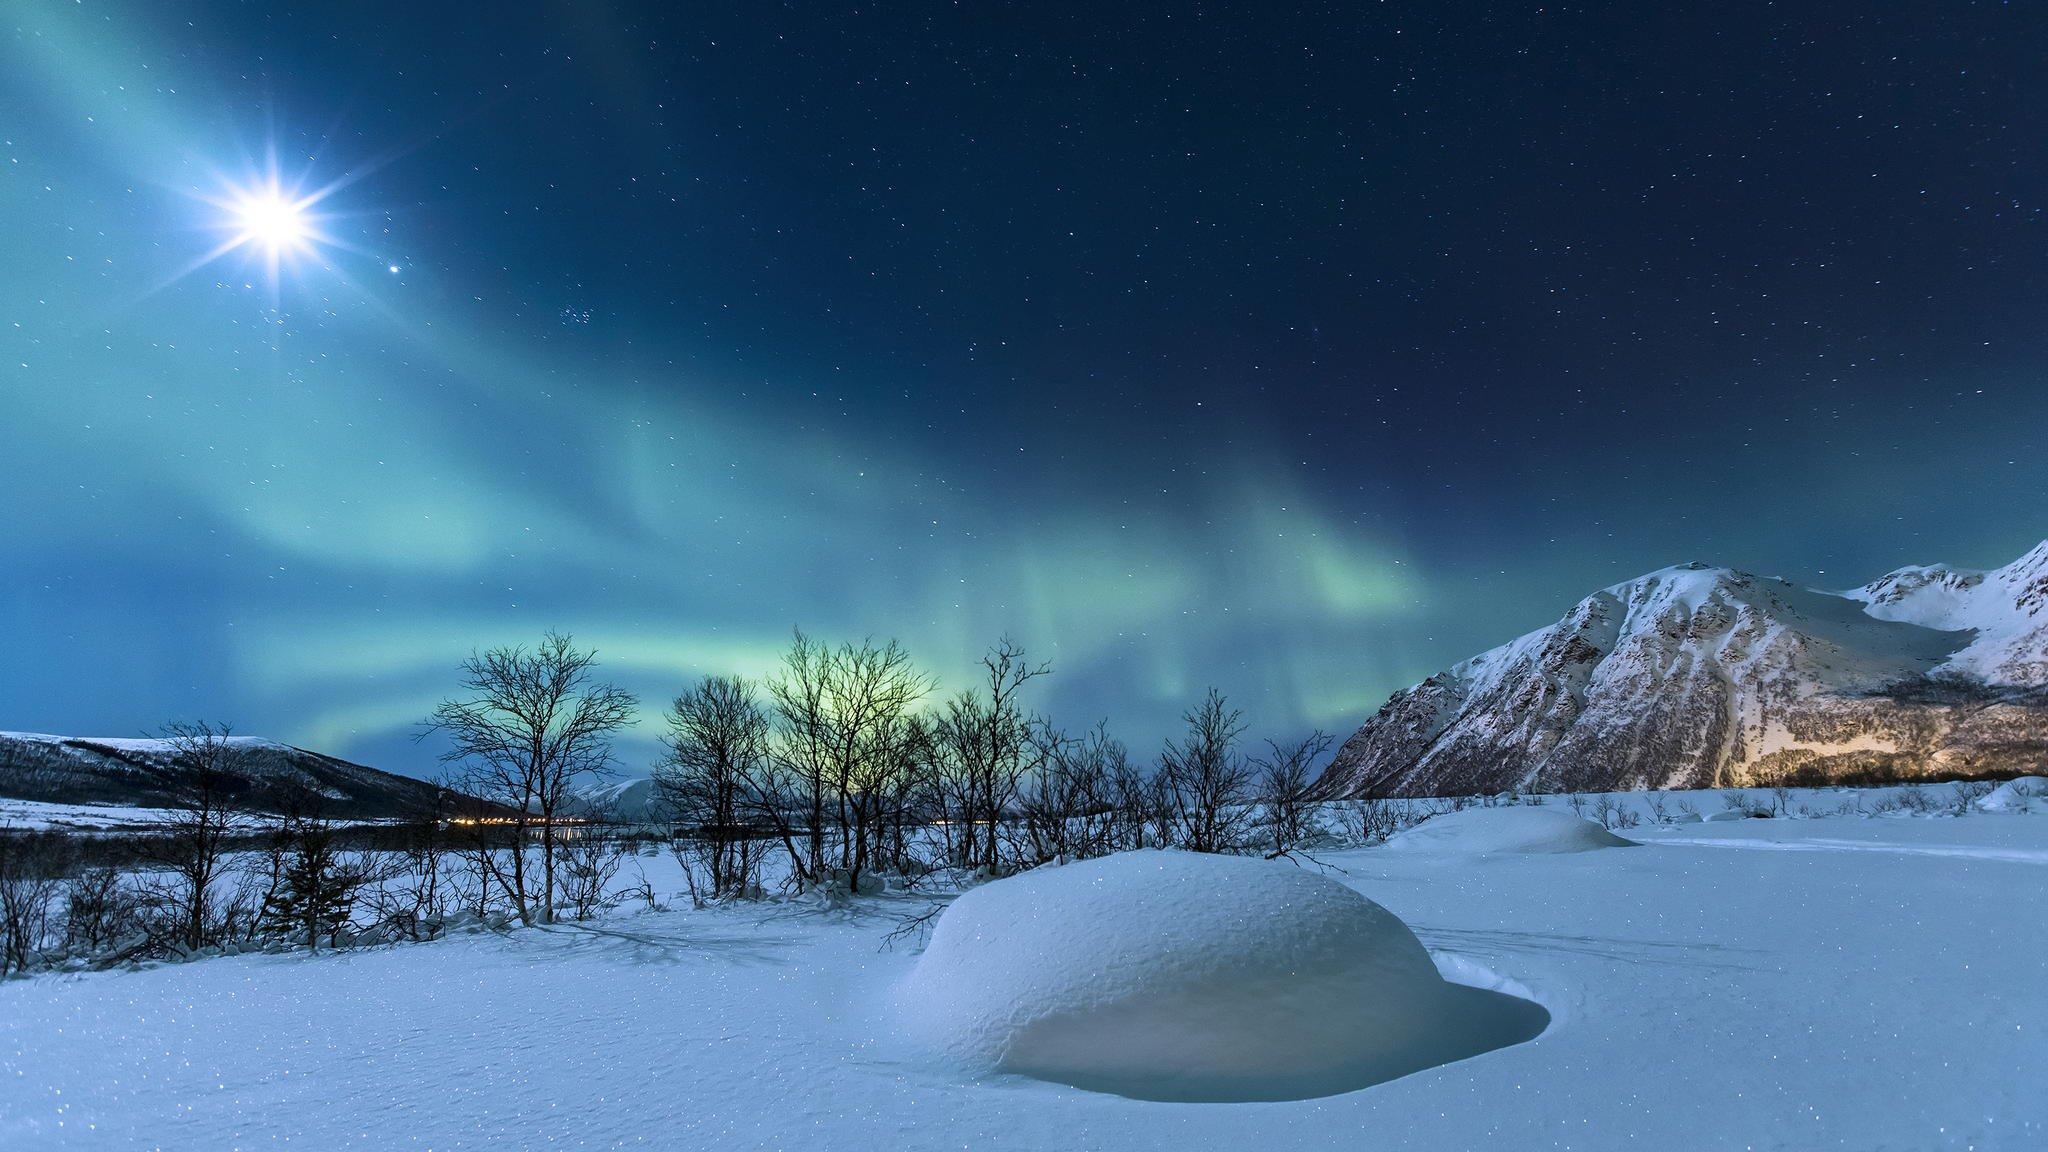 Norway Winter Night Hills At Night Wallpaper & Background Download